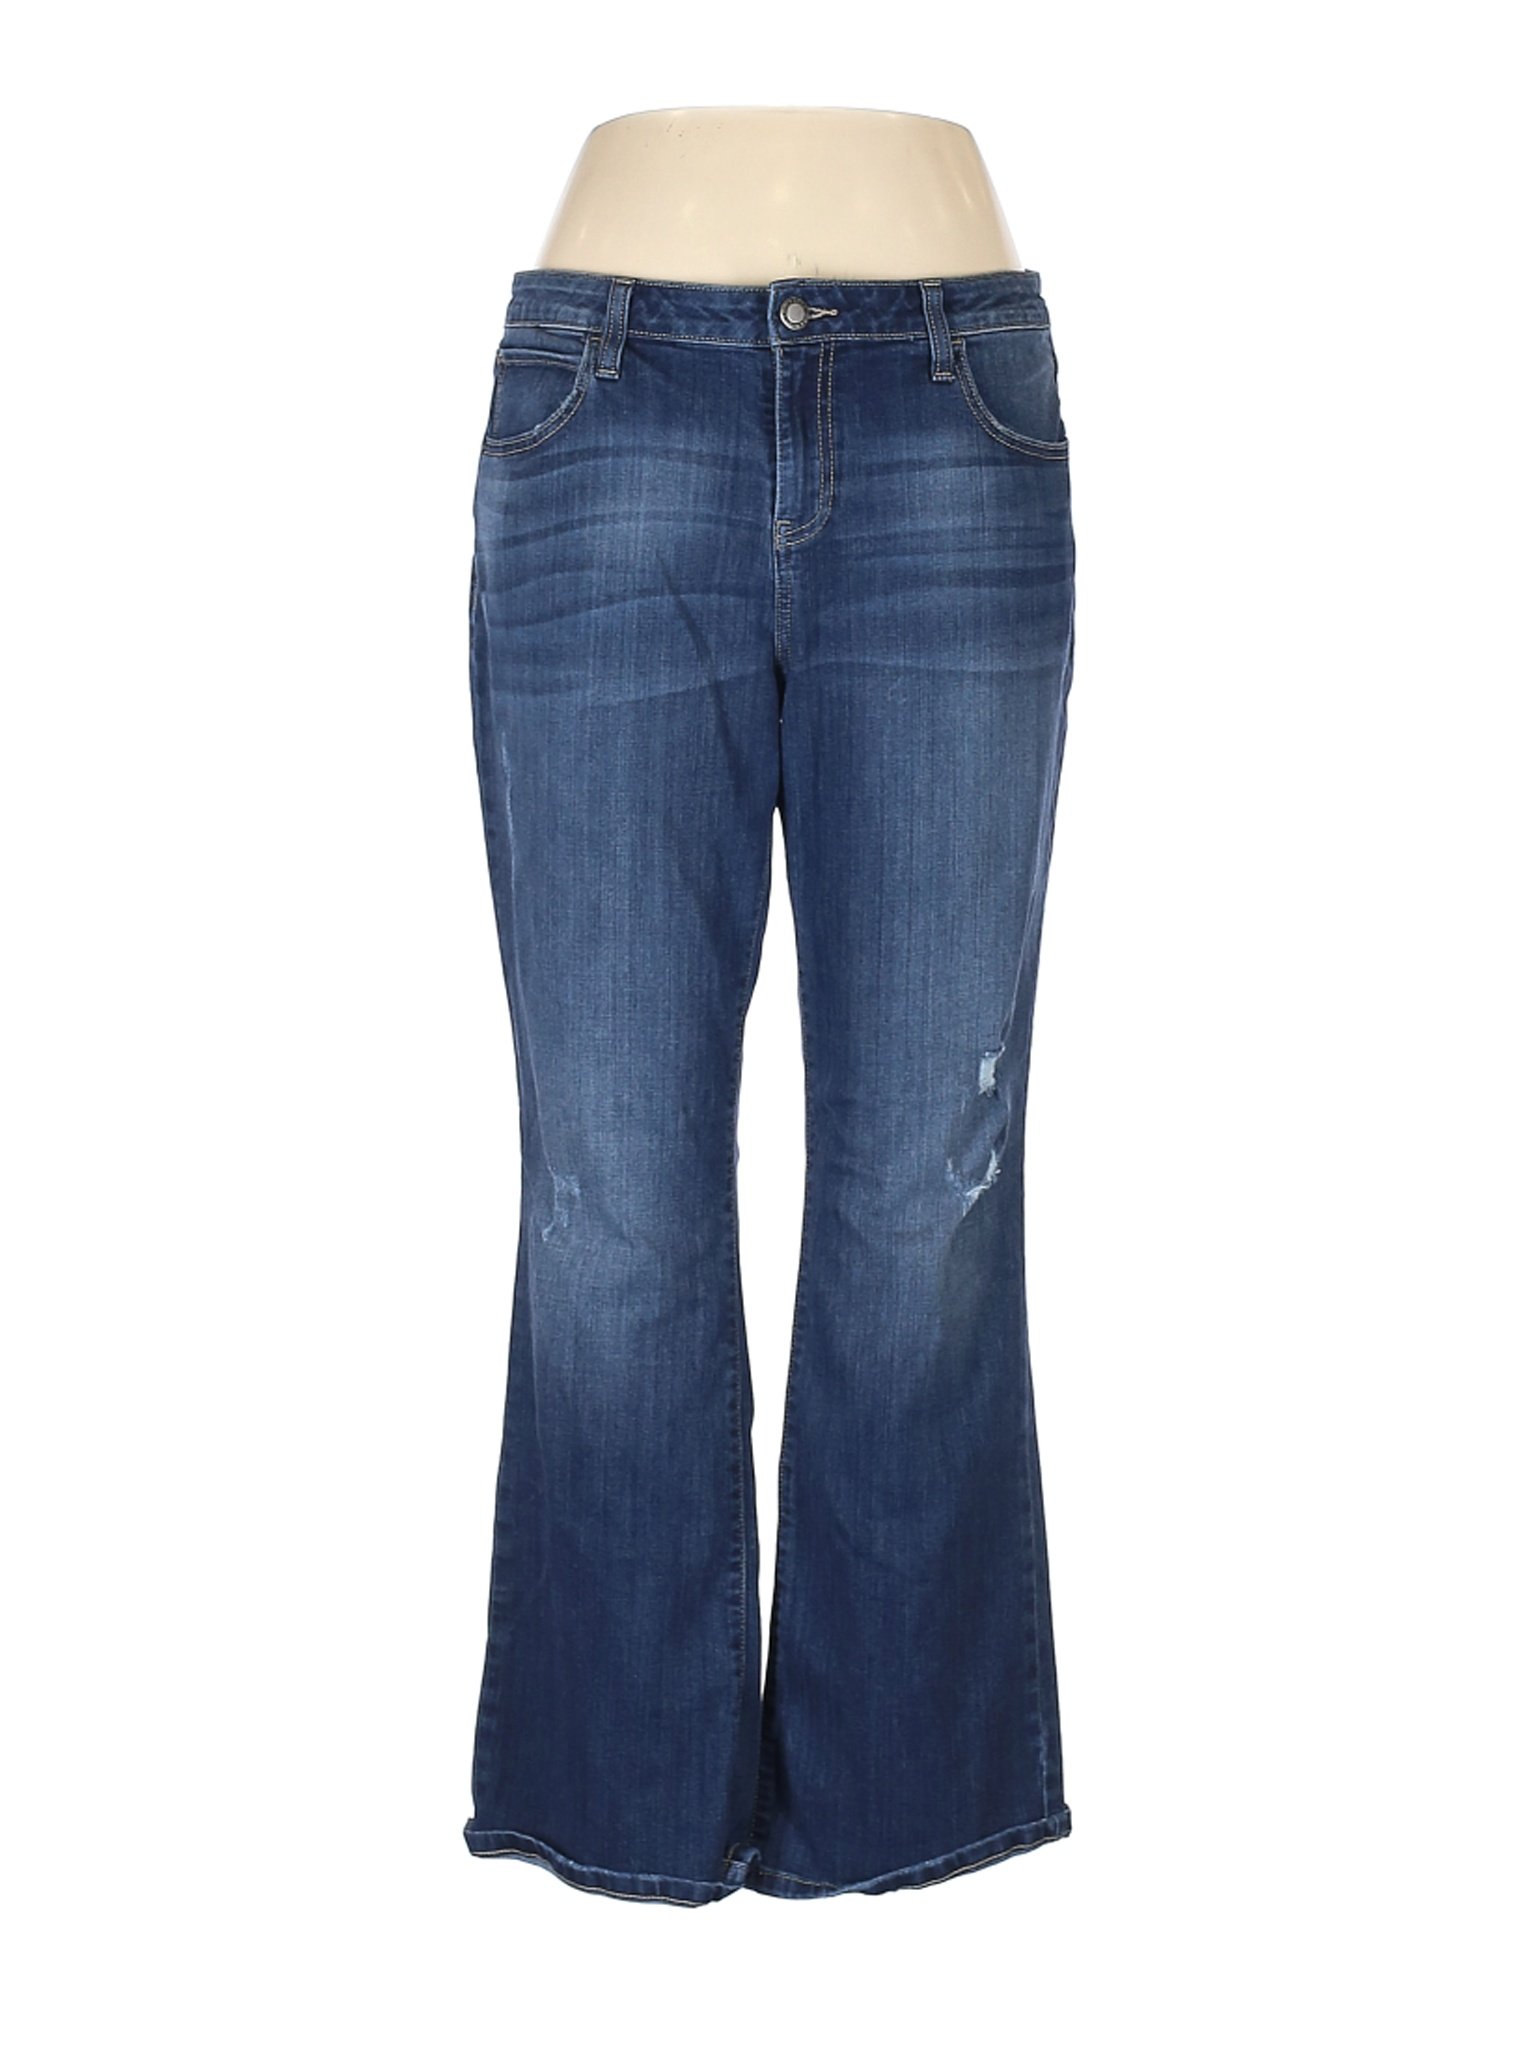 Simply Vera Vera Wang Women Blue Jeans 14 | eBay